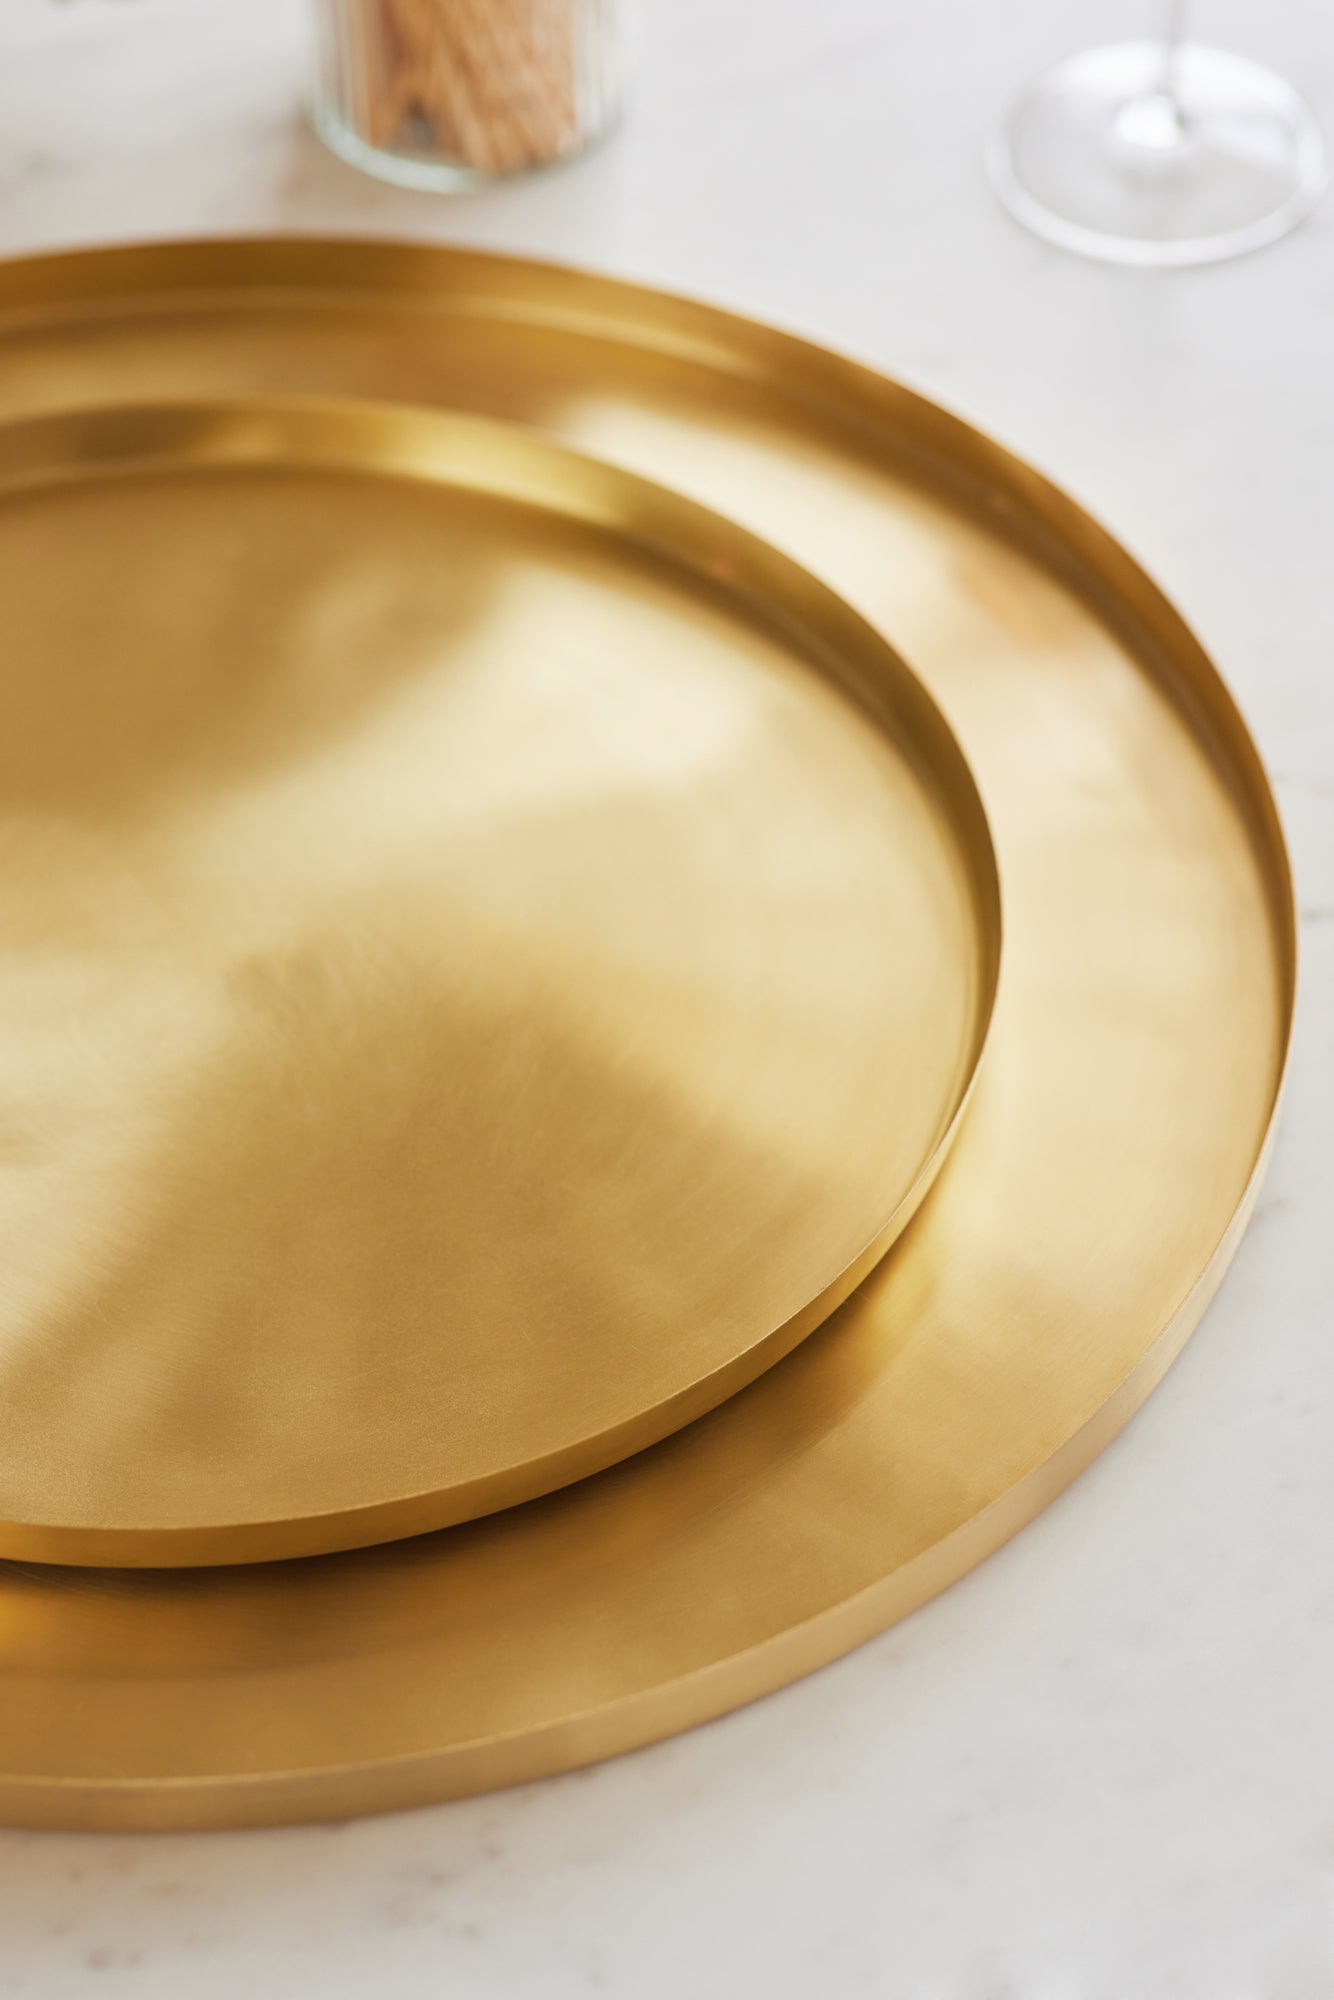 Heirloom Brass Serving Tray / Plate - Fleck